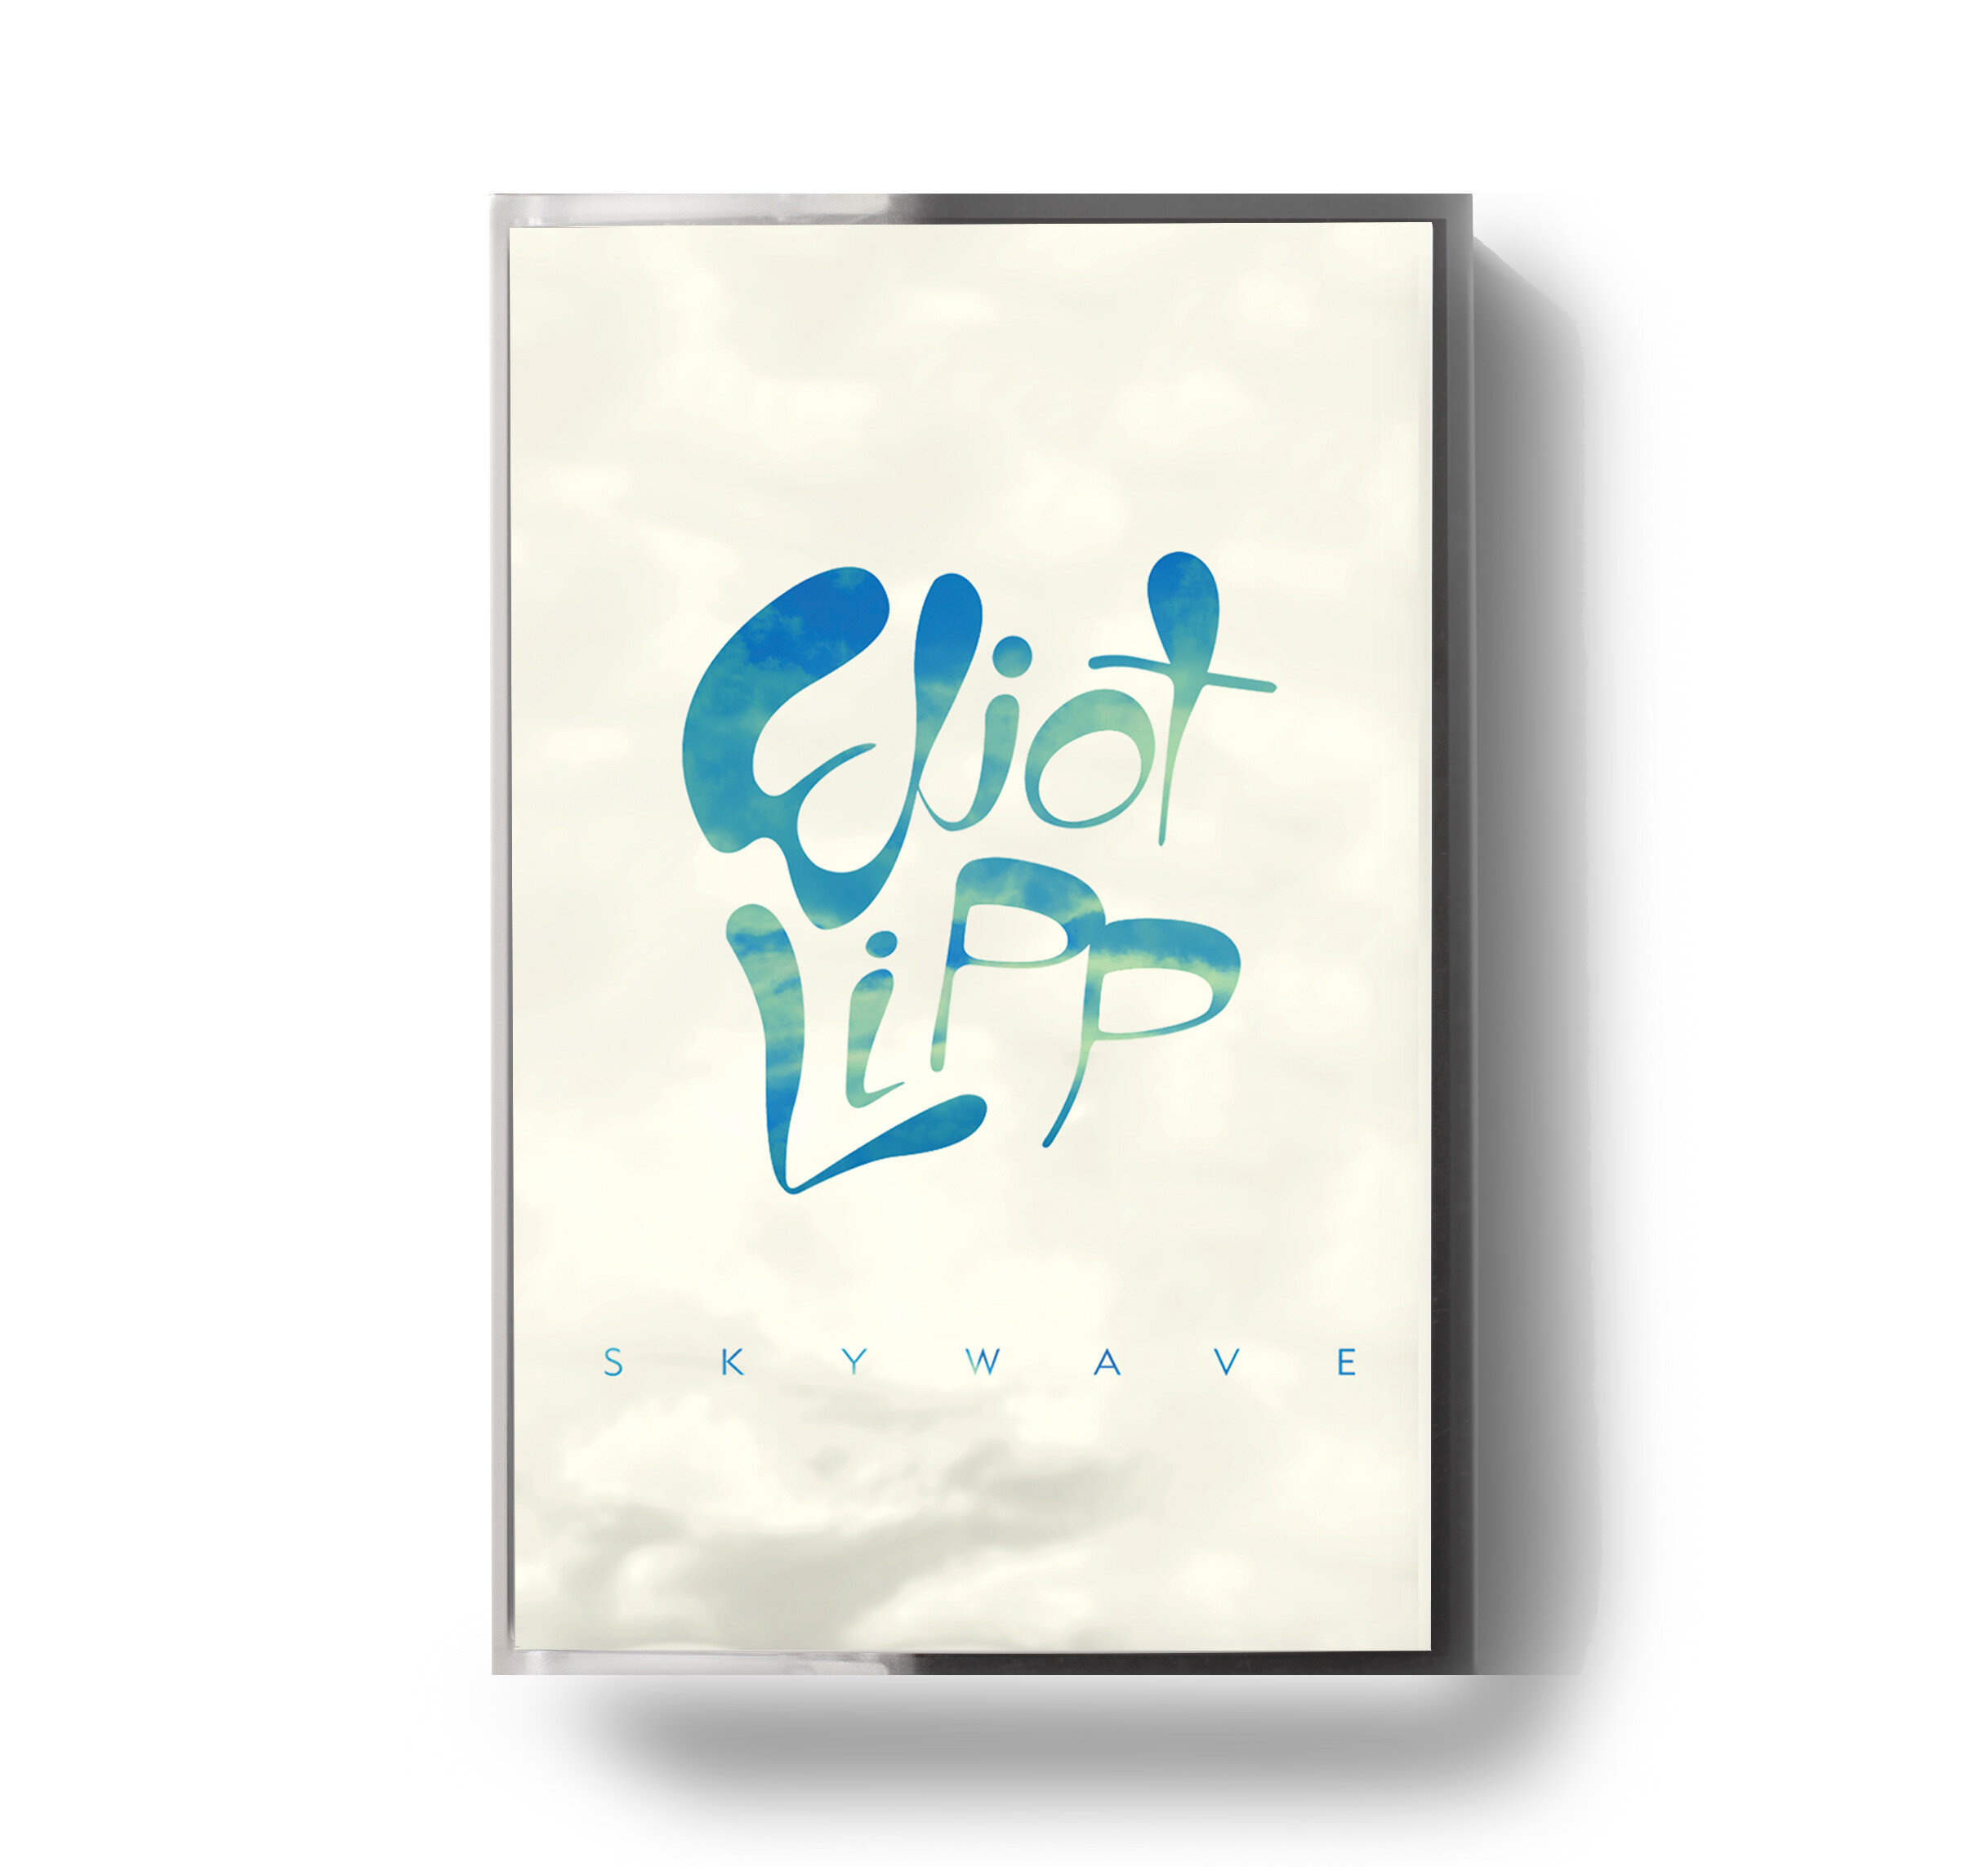 Eliot Lipp - Skywave (Cassette) – $8.00